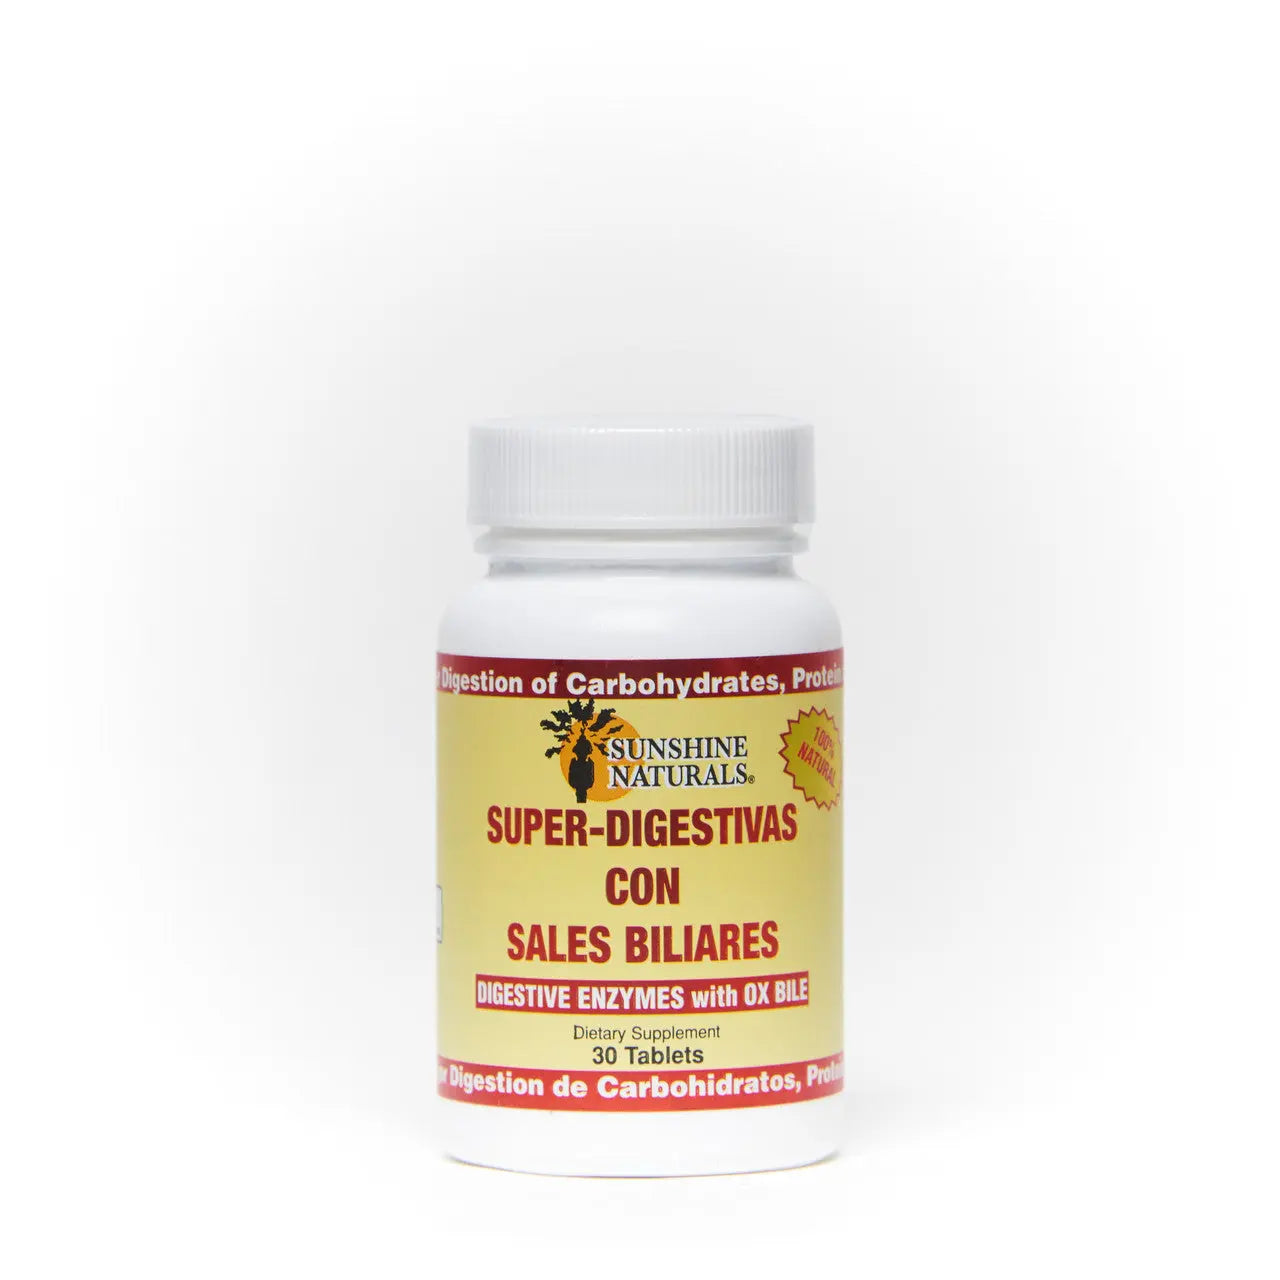 Super Digestives with Ox Bile (Super Digestivas) 30 Tablets Sunshinenaturals